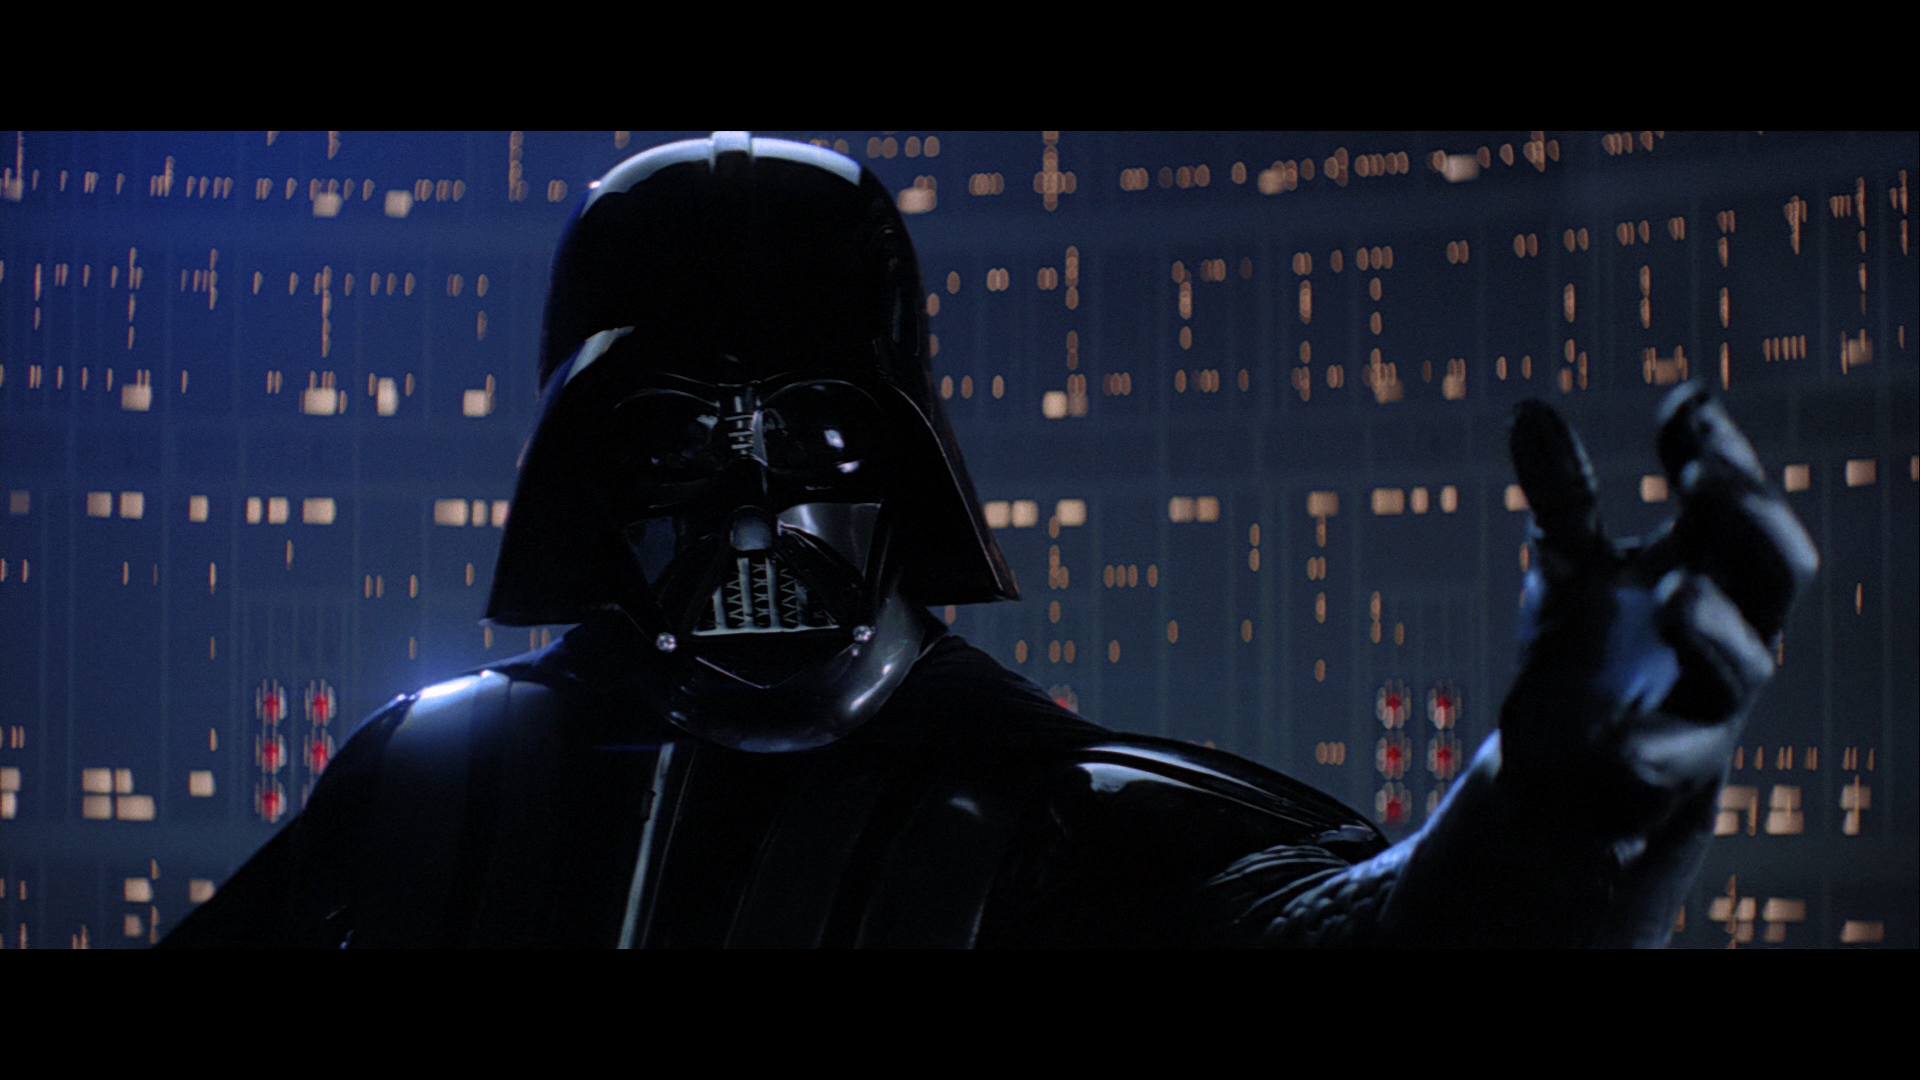 Movie Star Wars Episode V: The Empire Strikes Back HD Wallpaper | Background Image